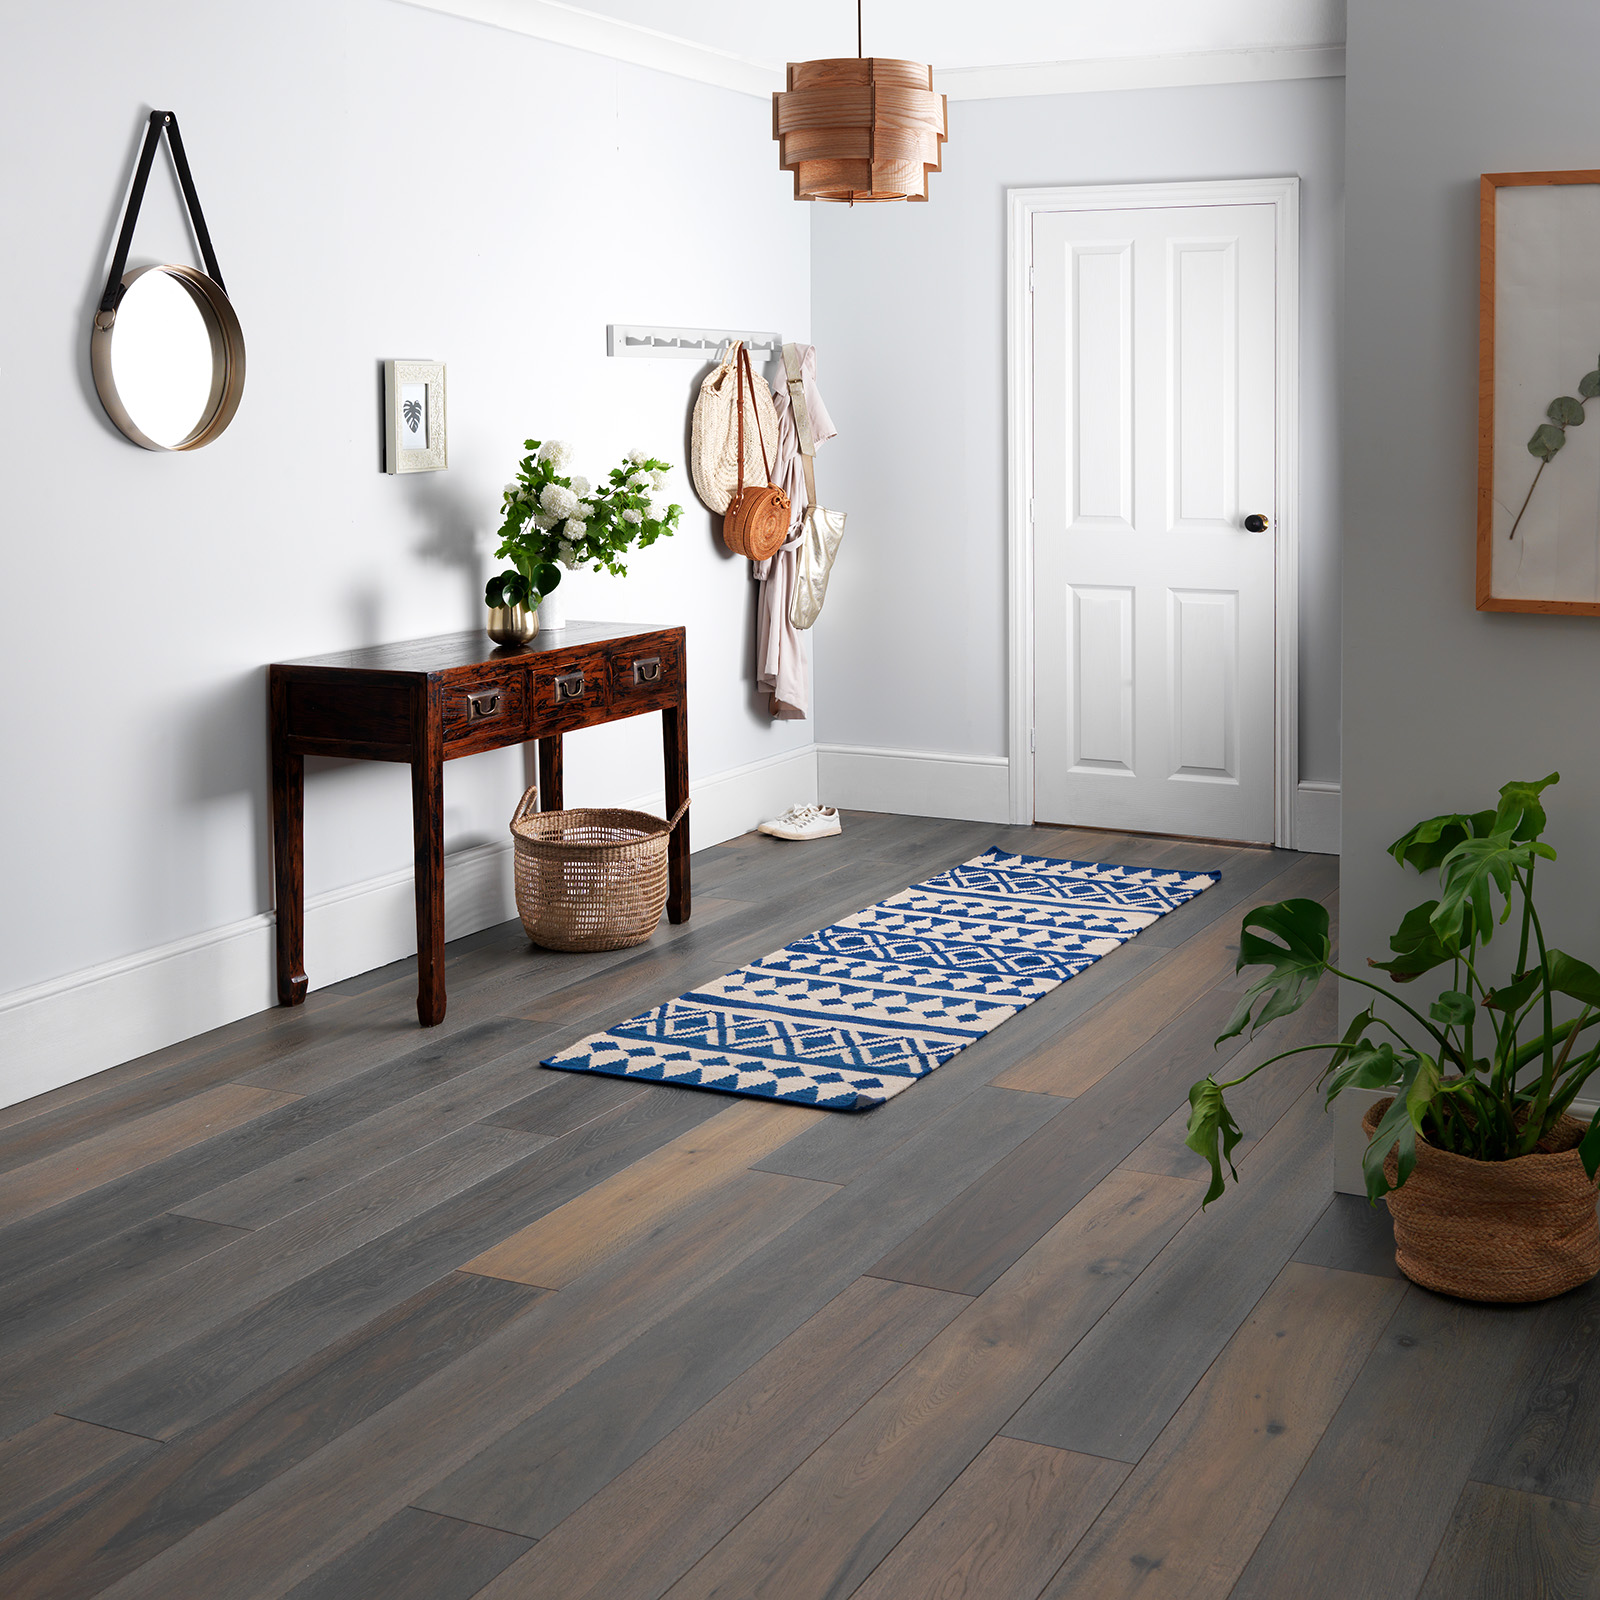 Oak-Flooring-Roomset